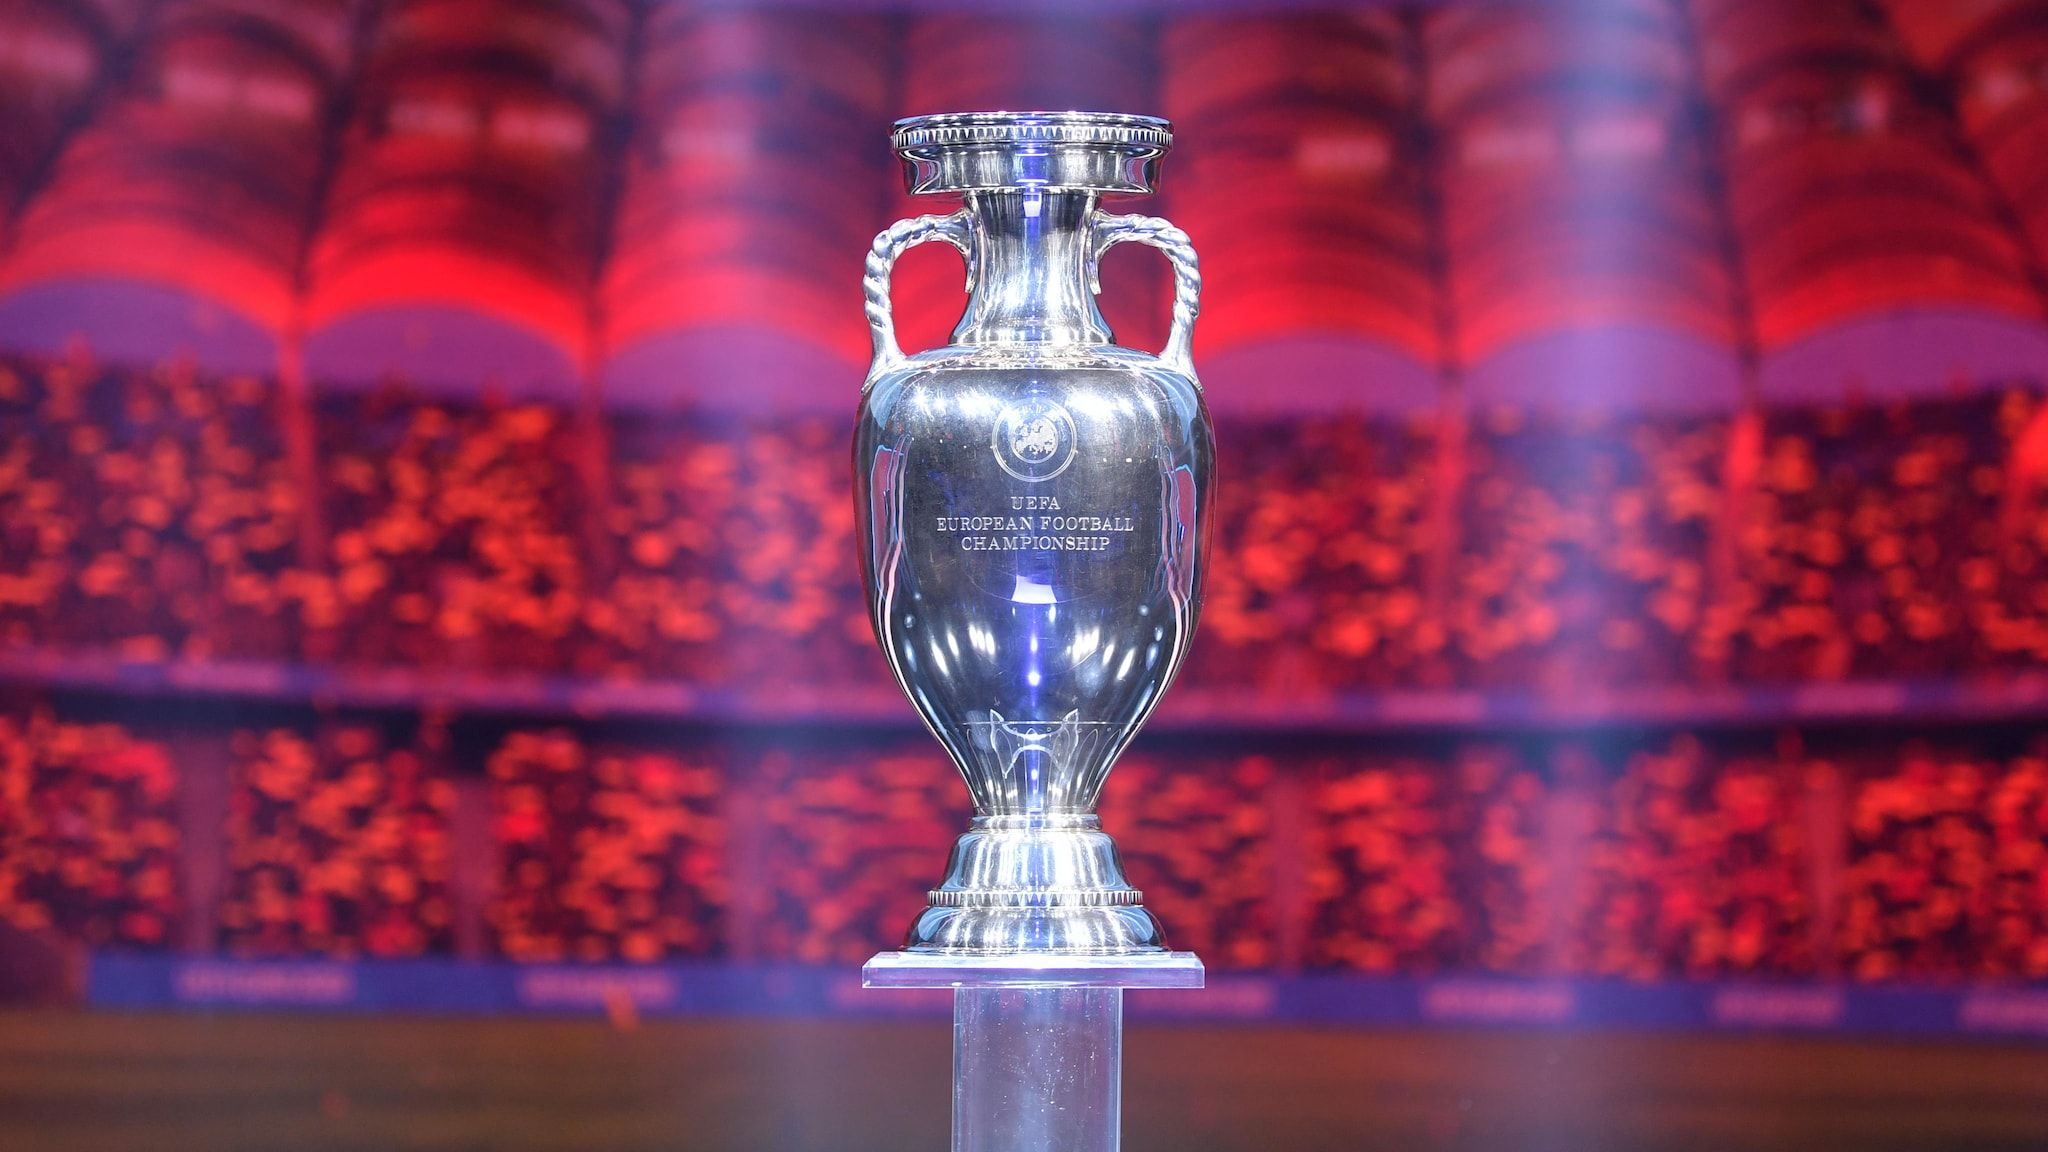 The UEFA EURO 2020 trophy. UEFA EURO 2020